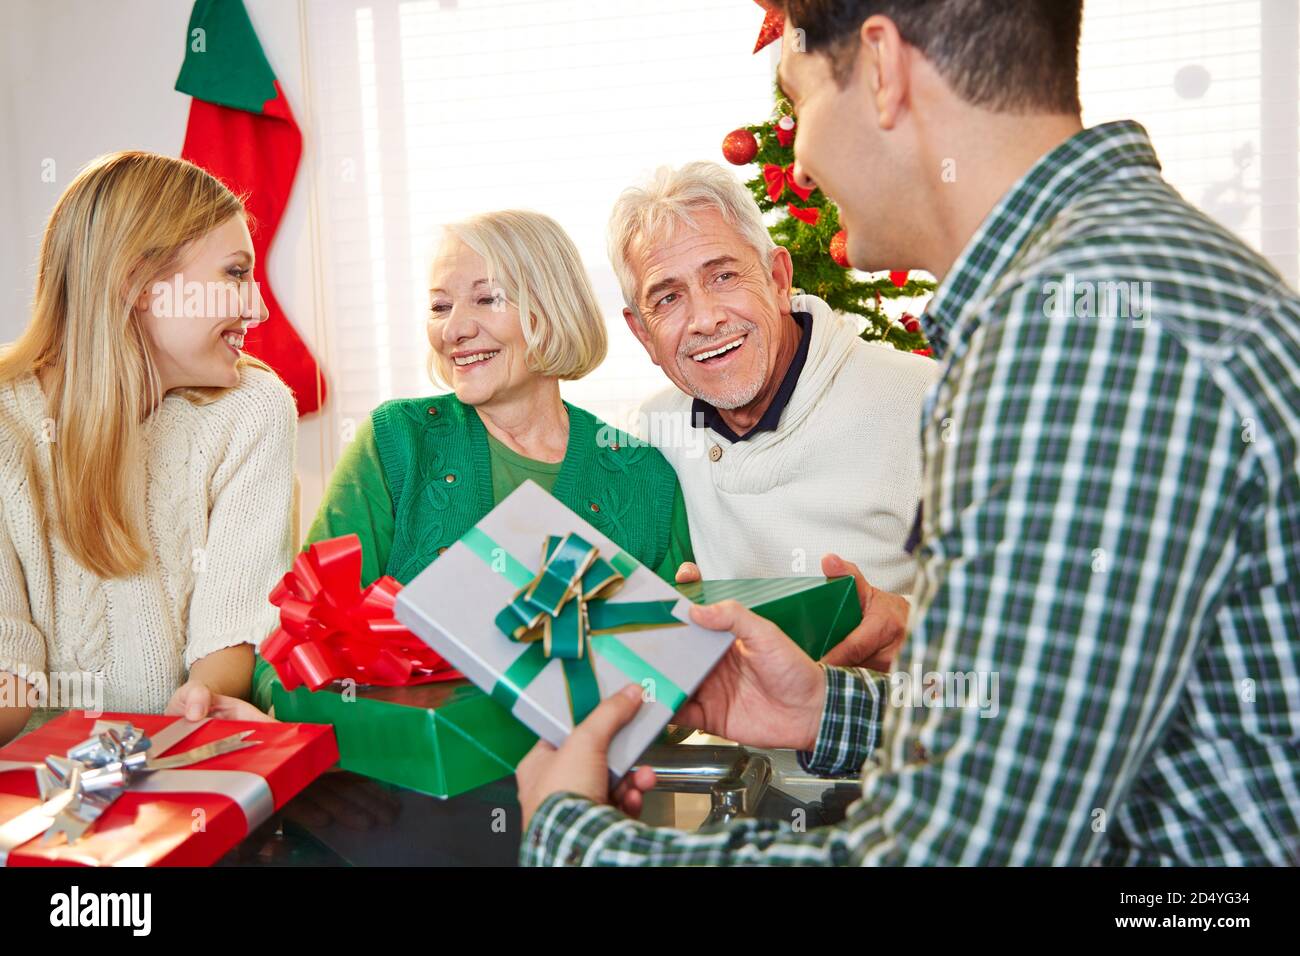 Happy family presents Christmas presents Stock Photo